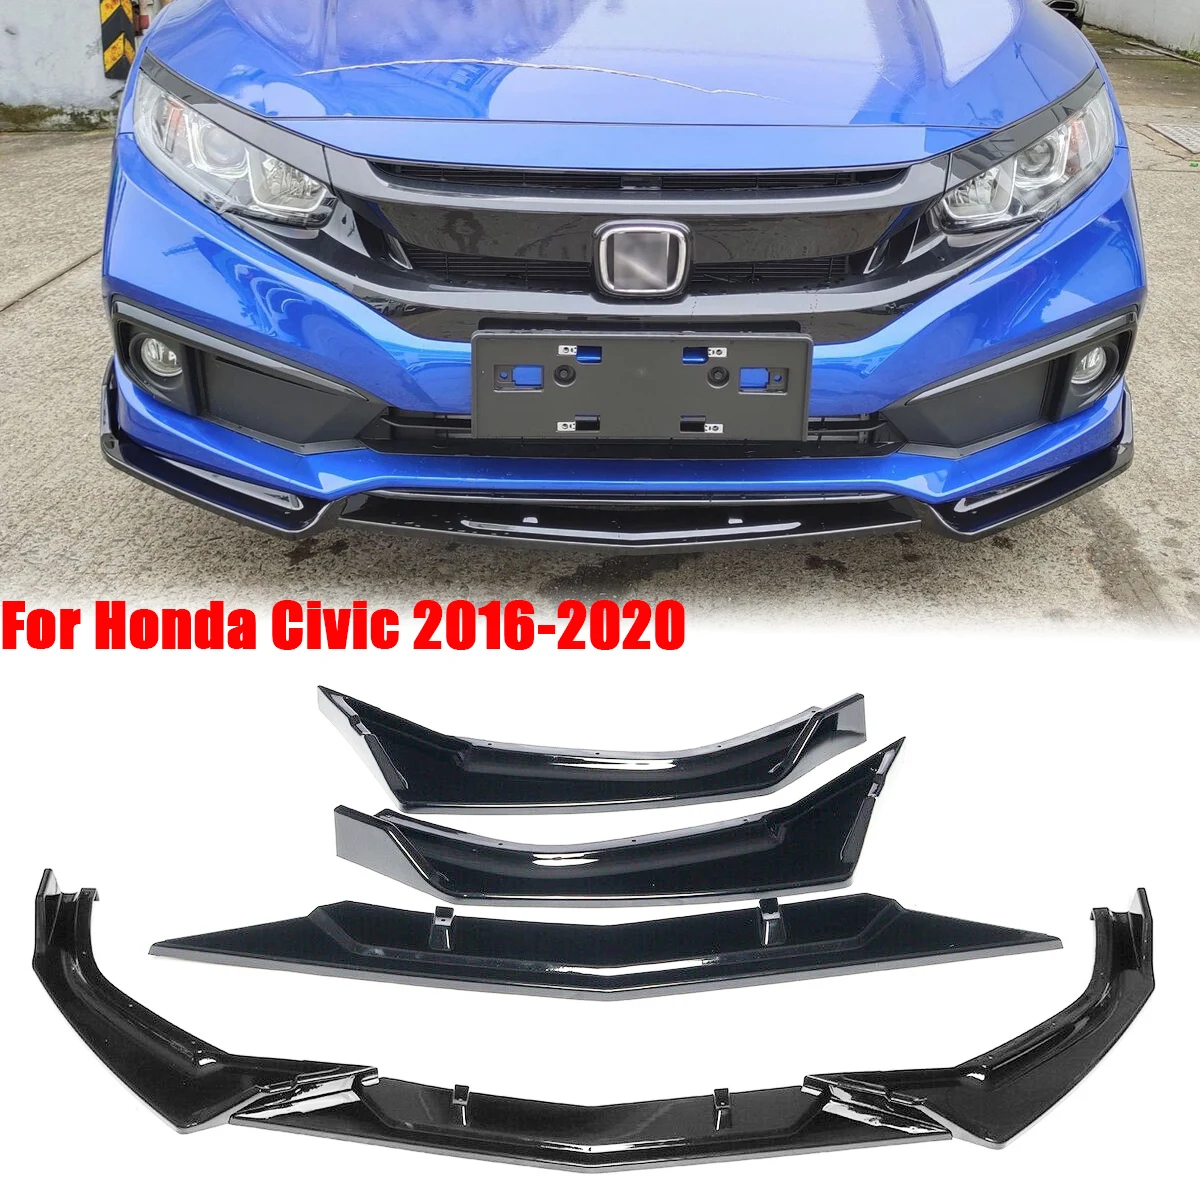 For Honda Civic 2016-2020 10th Gen Front Bumper Lip Spoiler Side Splitters Diffuser Body Kit Guards Protector Car Accessories